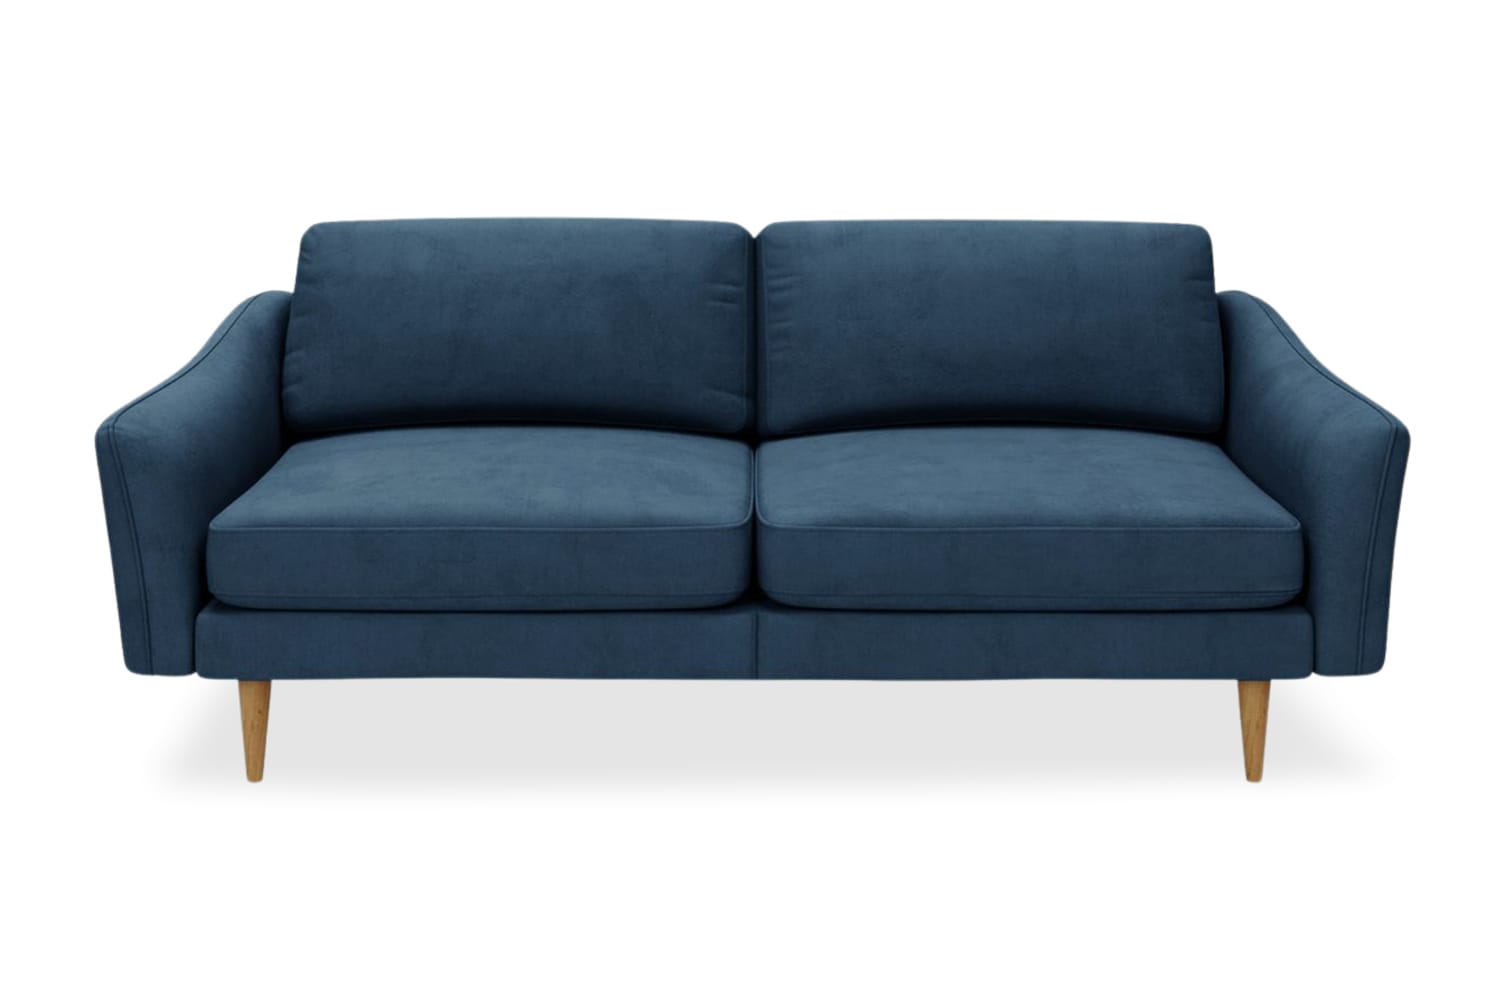 SNUG | The Rebel 3 Seater Sofa in Blue Steel variant_40414890098736